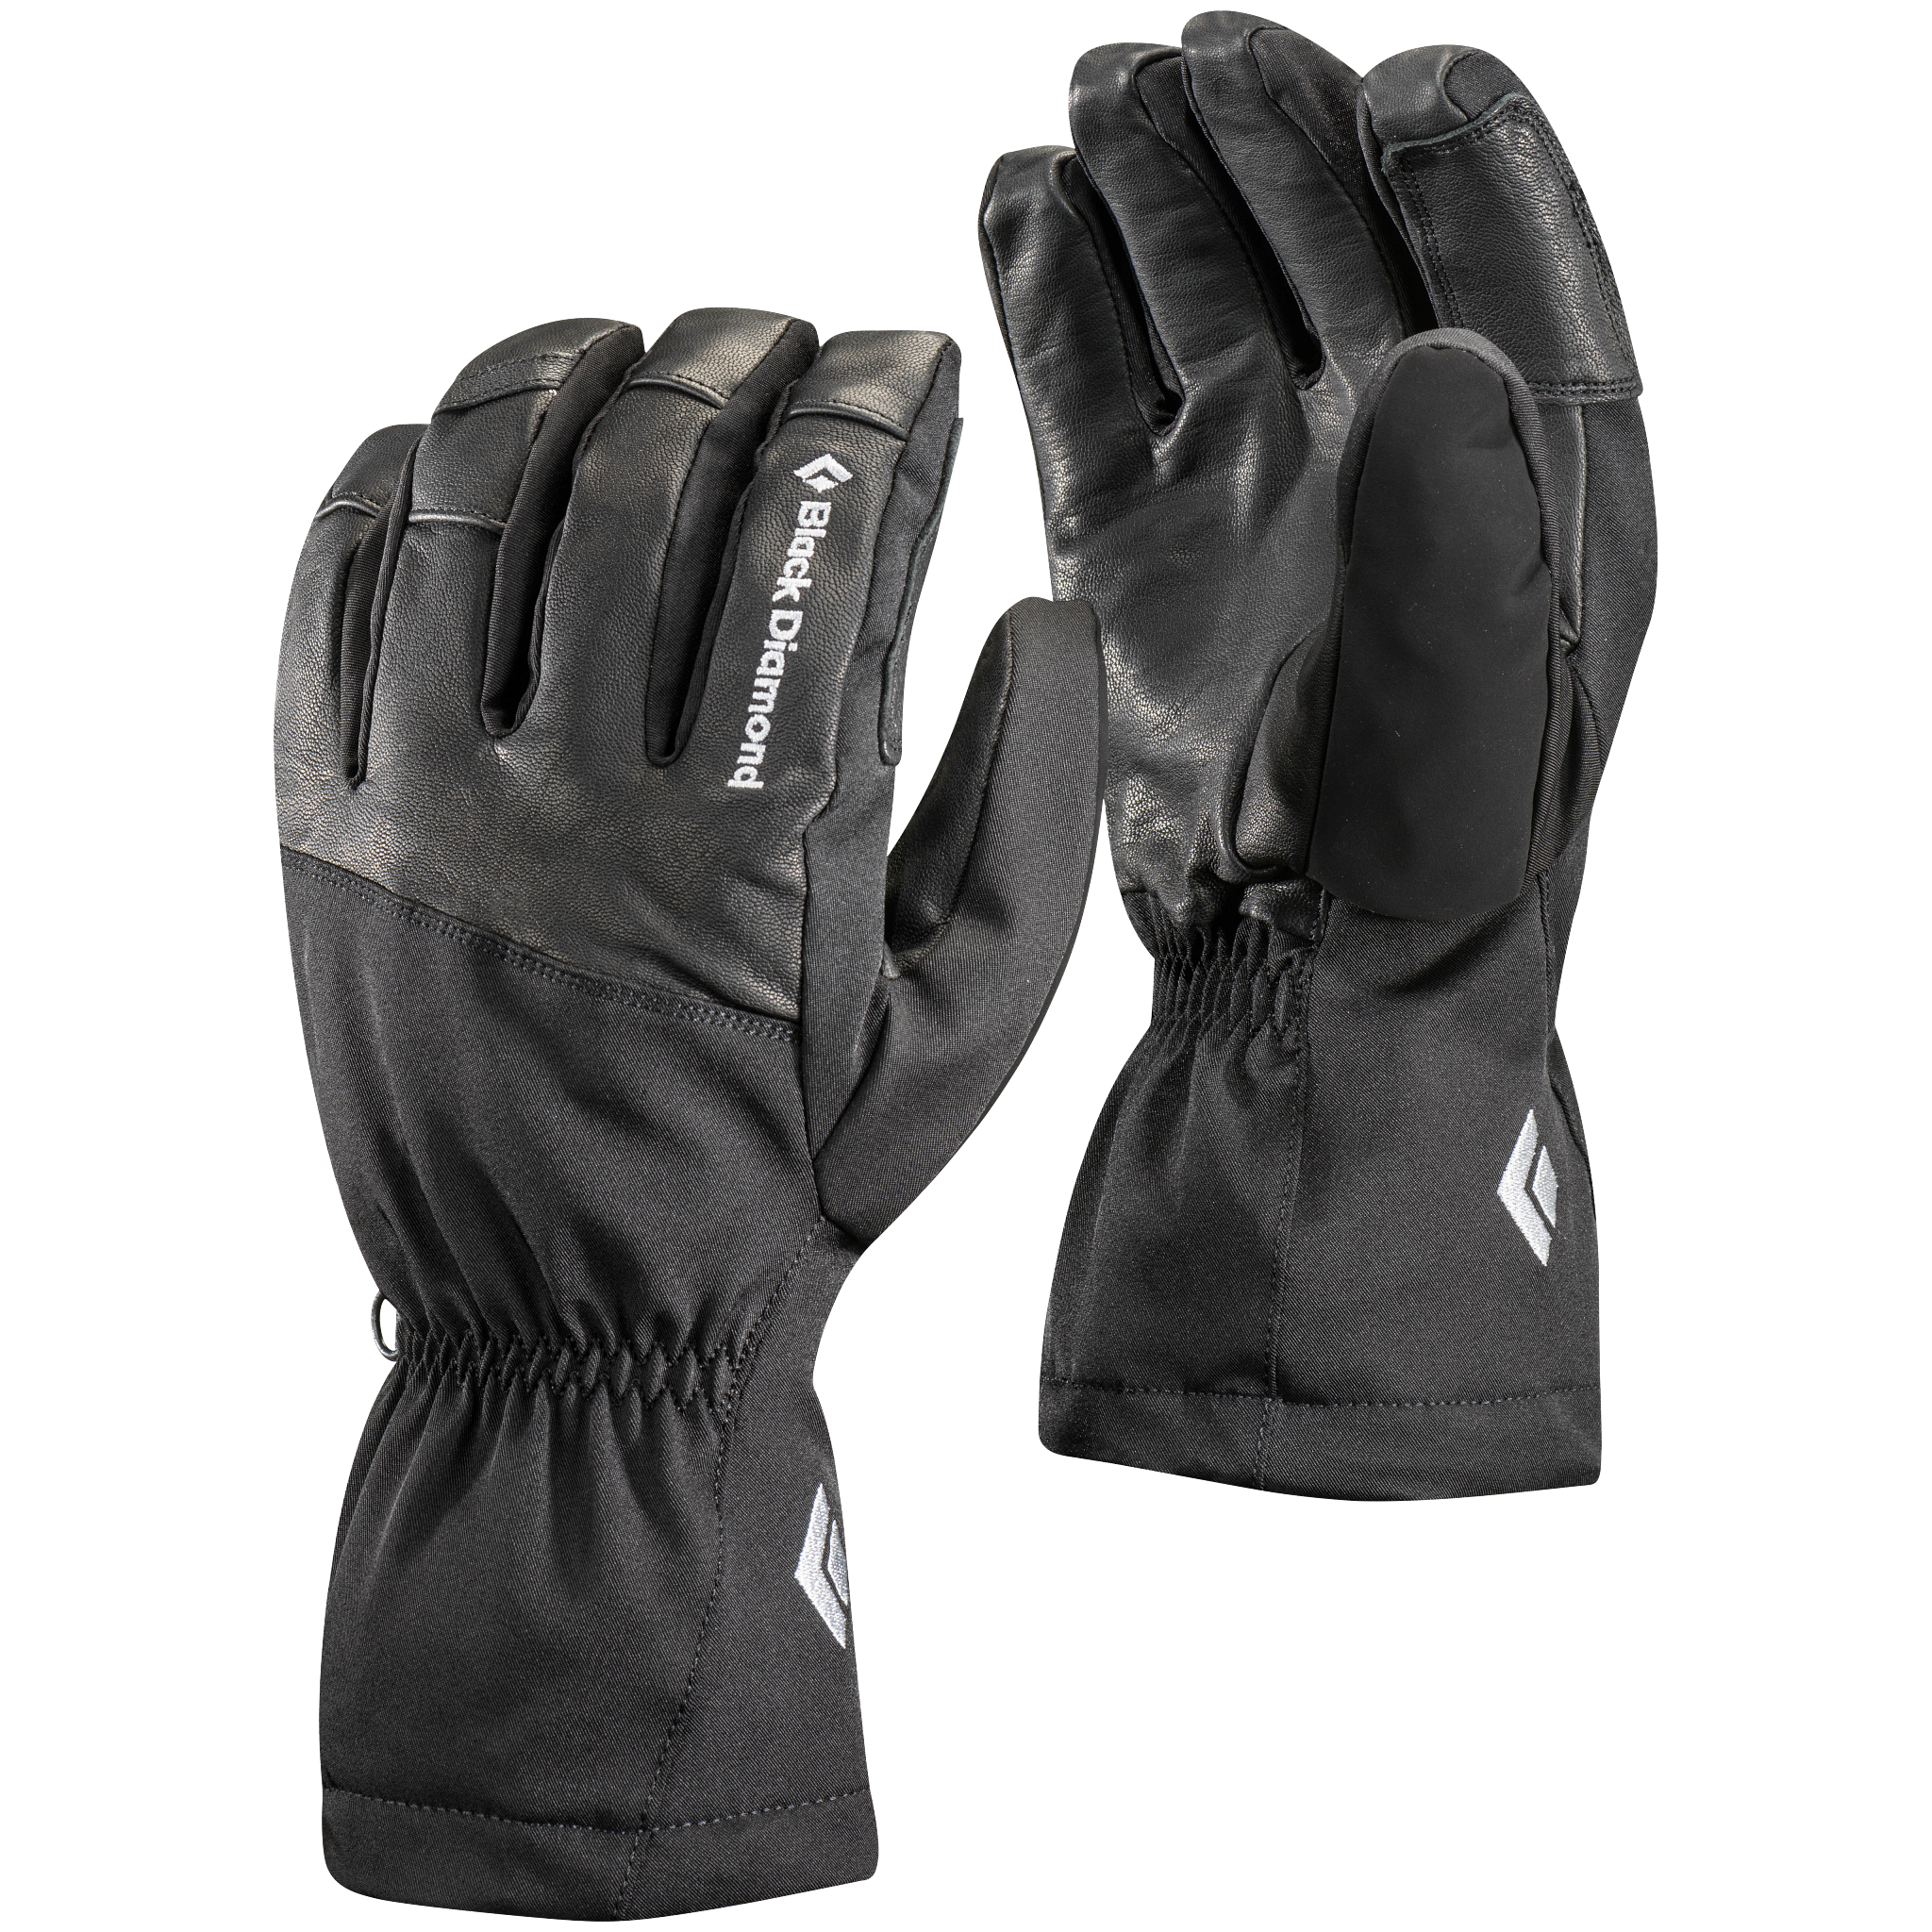 Black Diamond Equipment Renegade Gloves Size Small, in Black